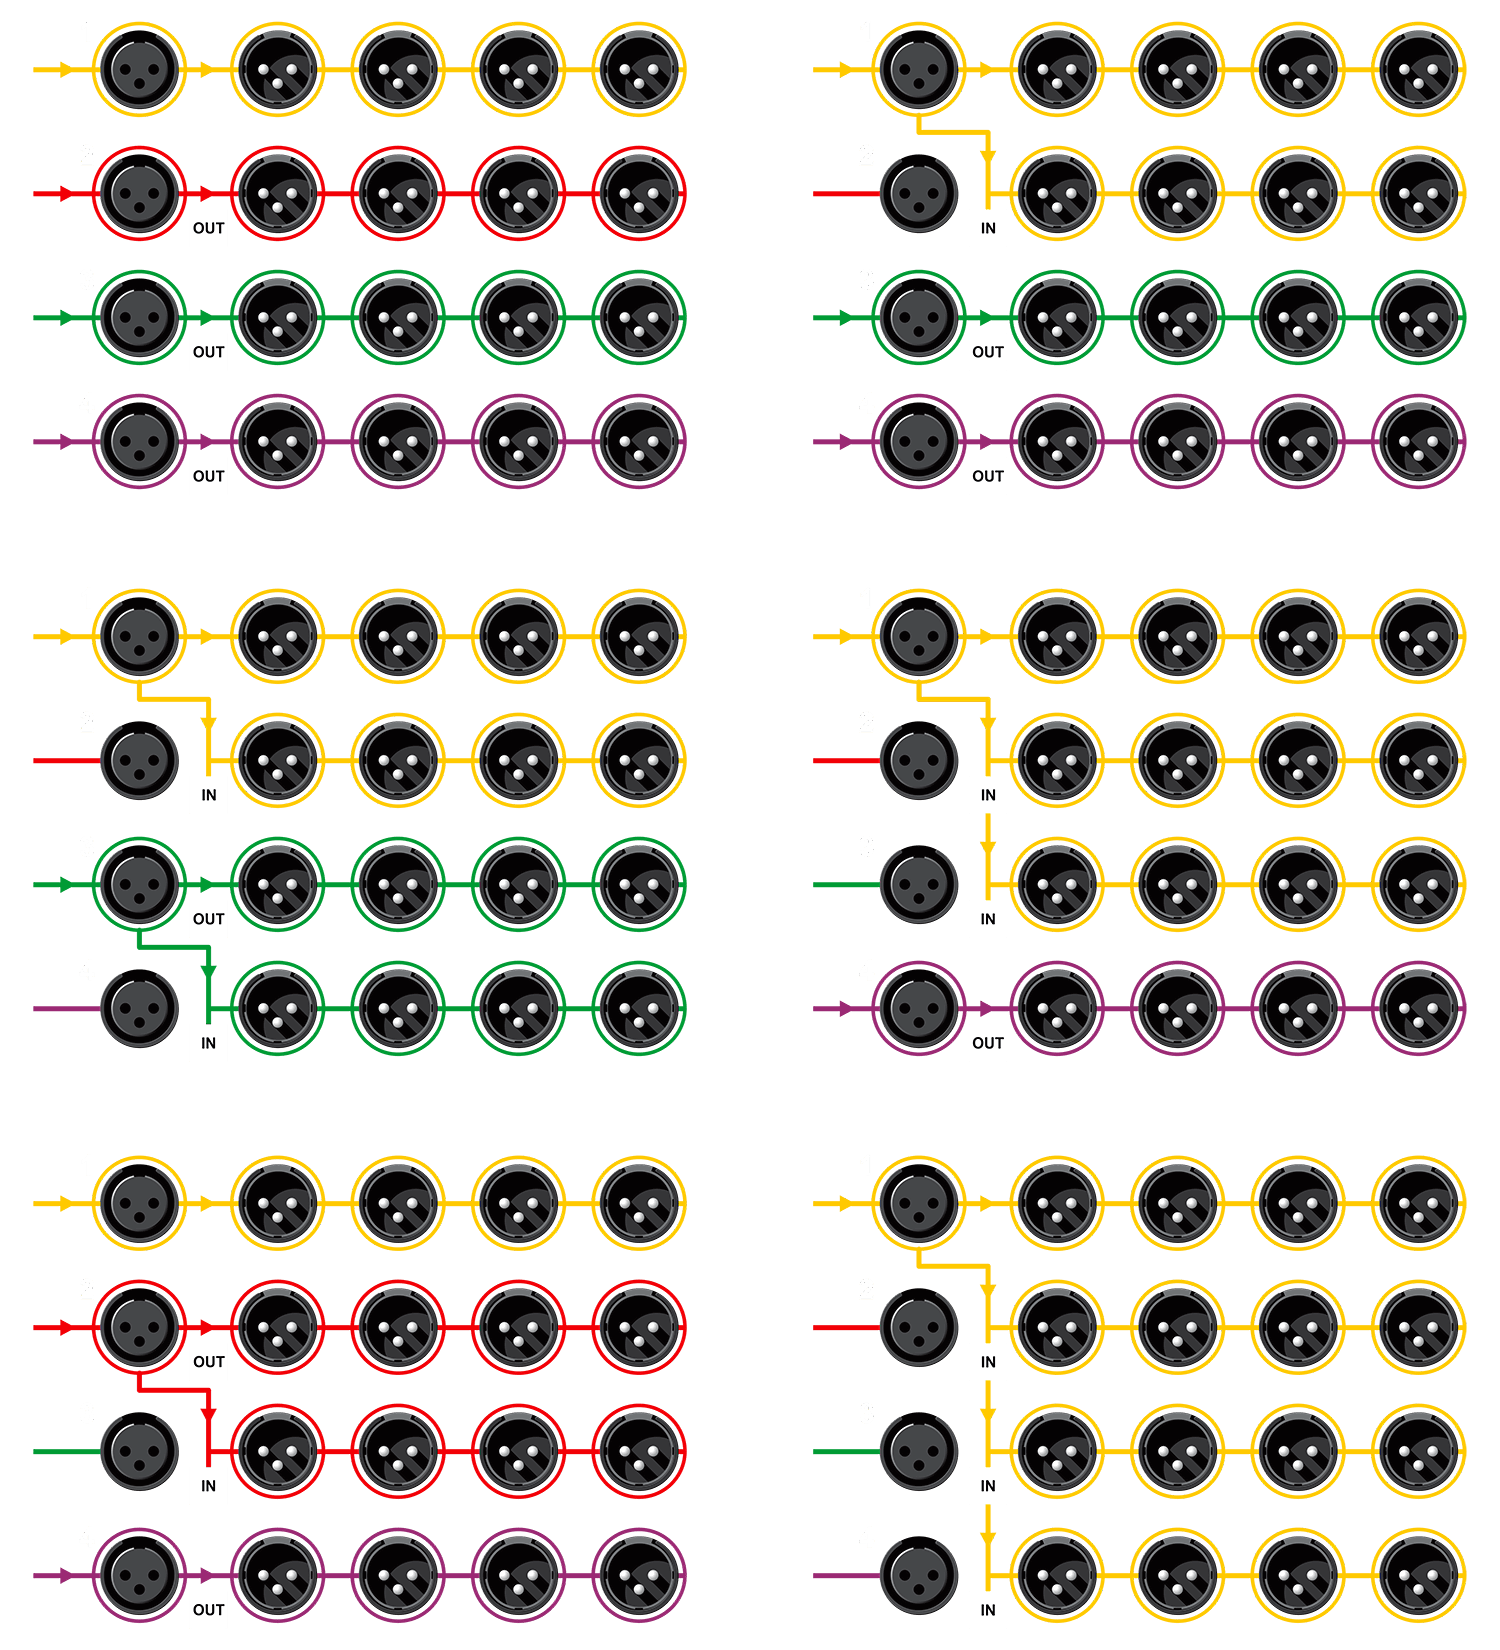 4X4 configurations